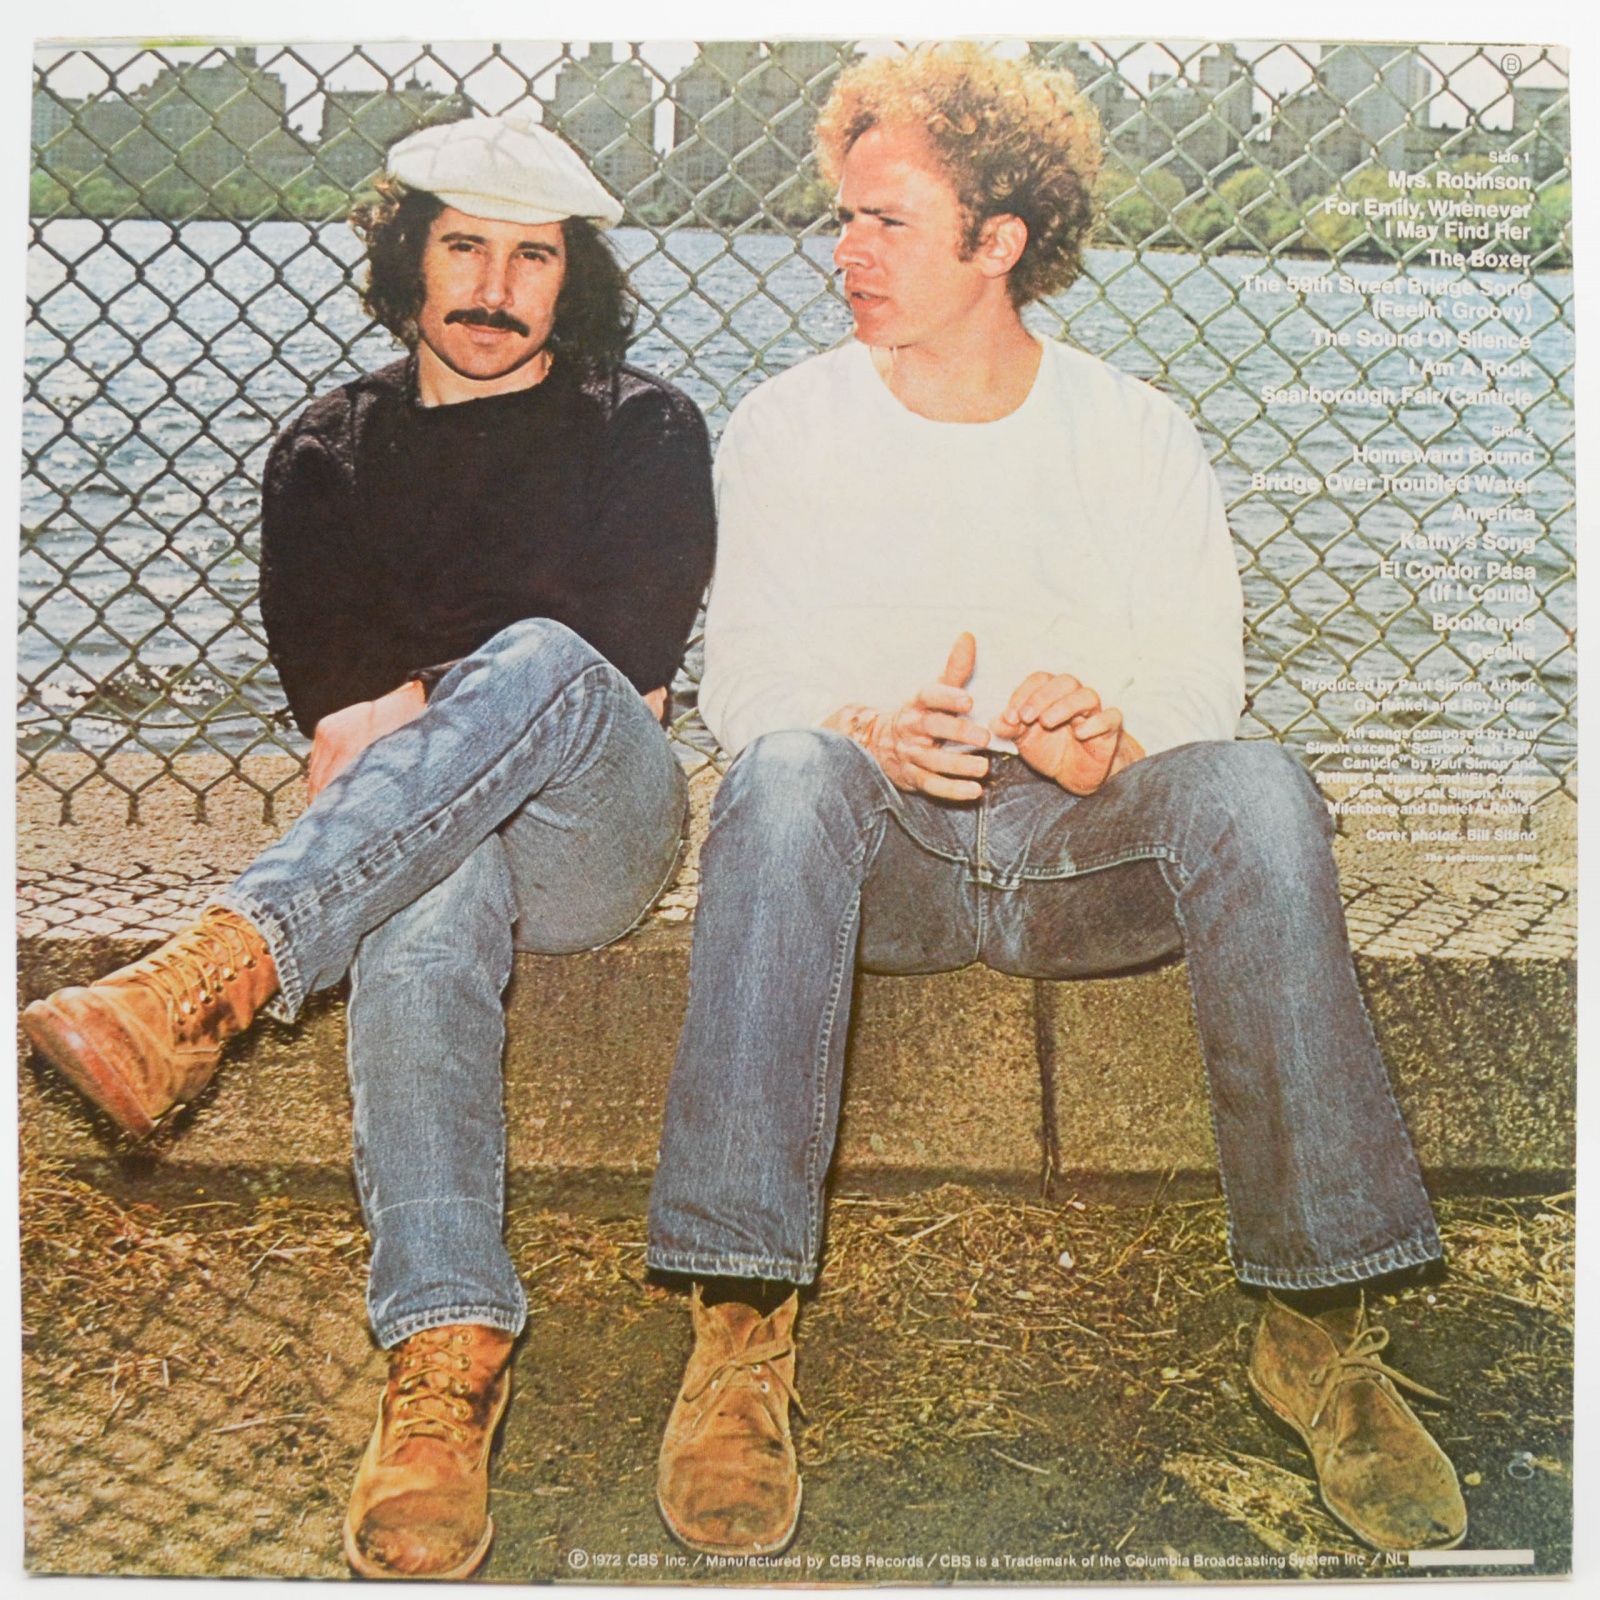 Simon & Garfunkel — Simon And Garfunkel's Greatest Hits, 1972